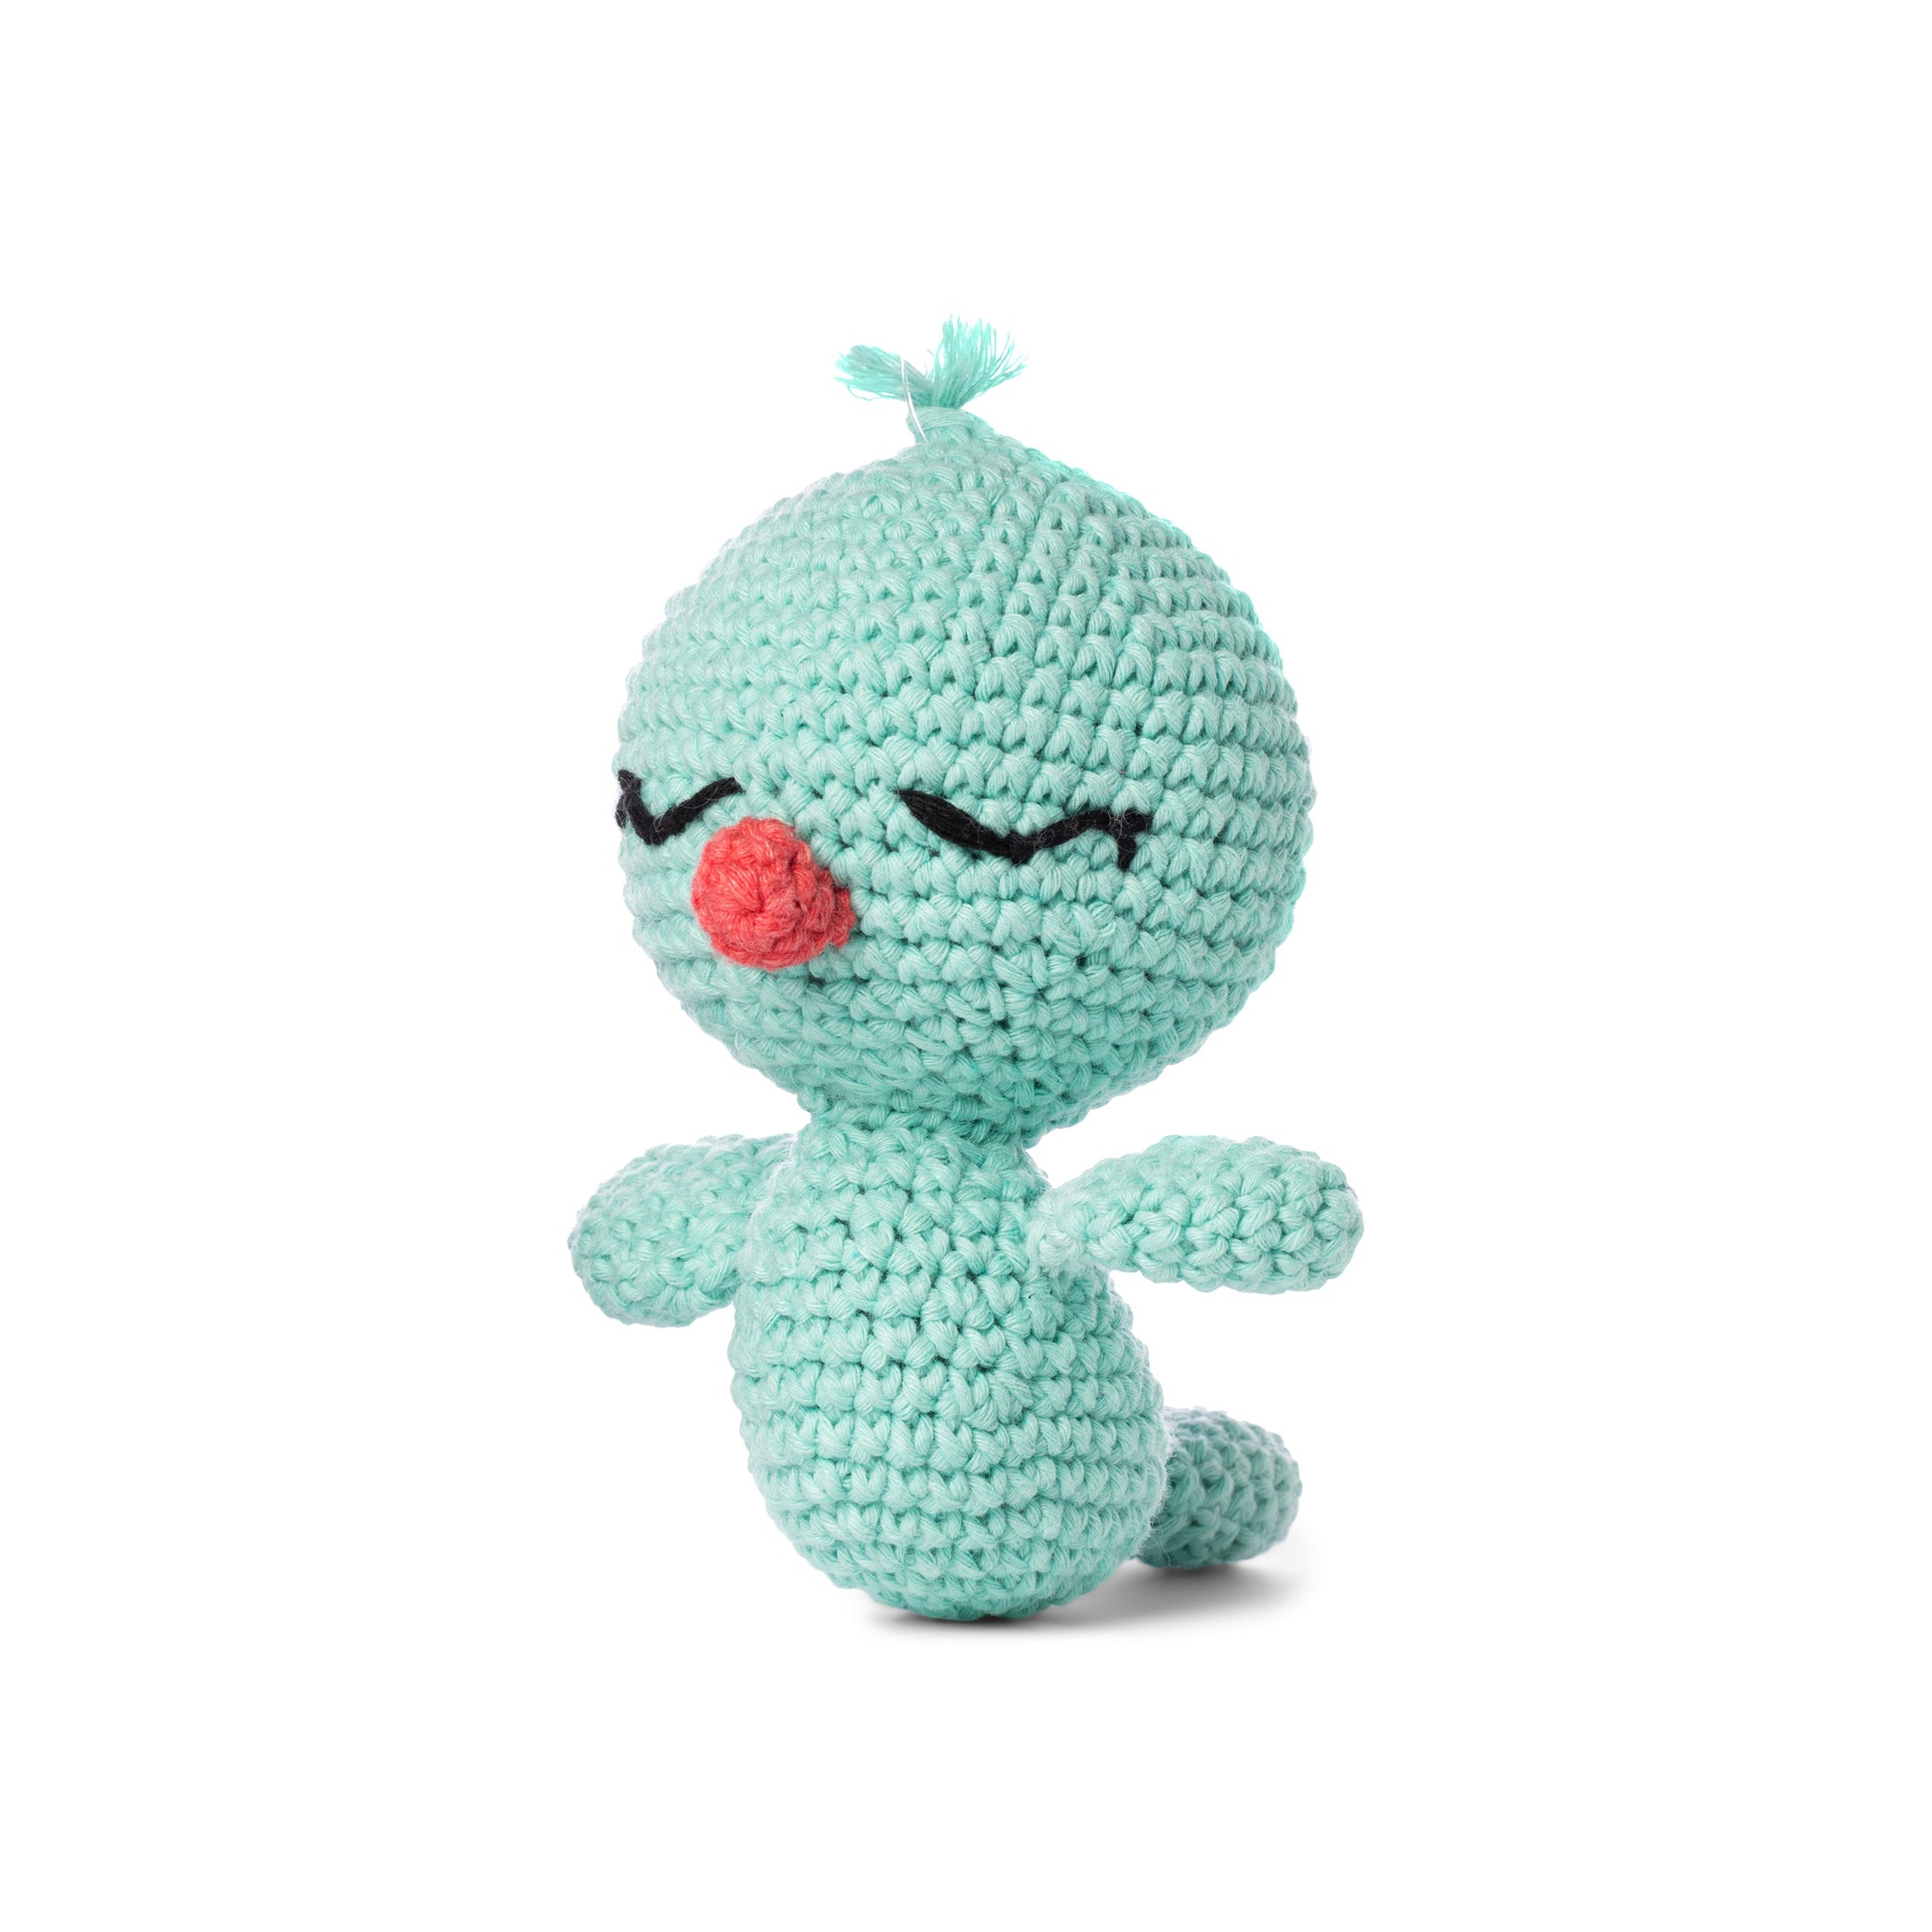 Red Heart Amigurumi Crochet Kit in Nugget The Kitten | Size: 70g/2.5oz | by Yarnspirations